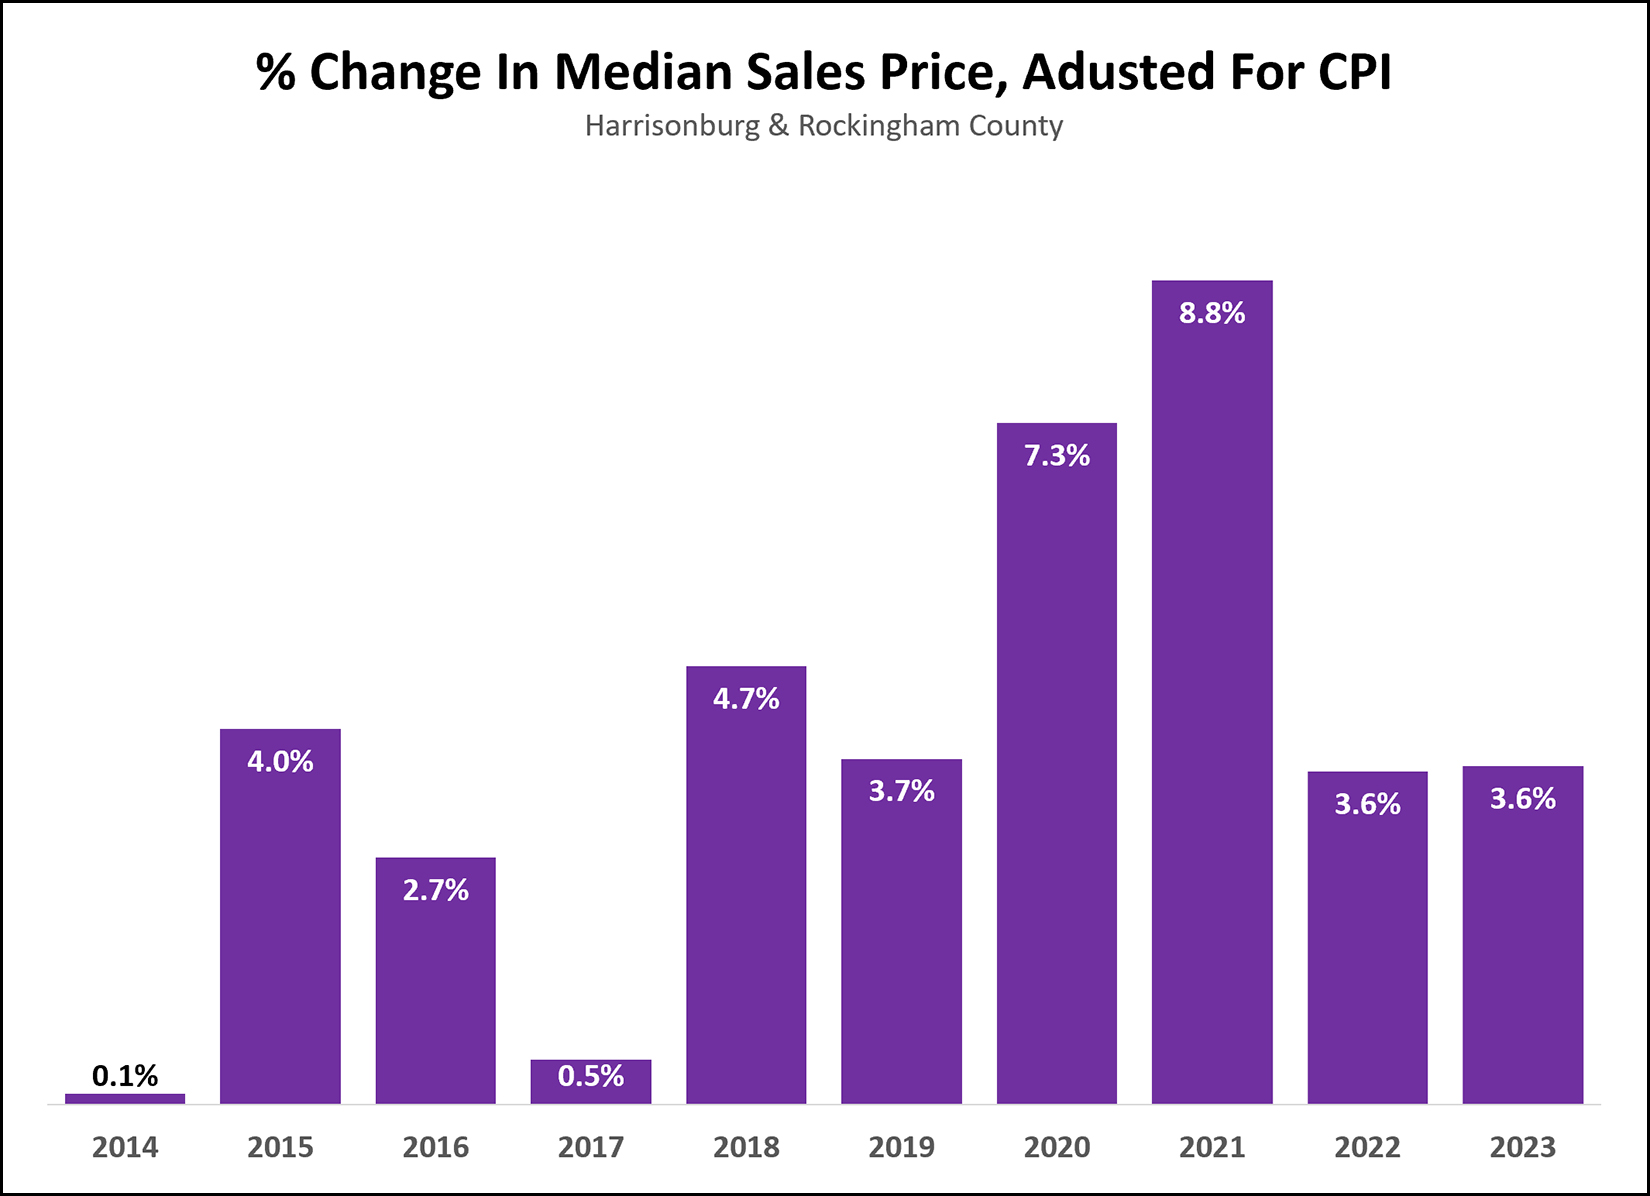 Median Price Adjusted For CPI